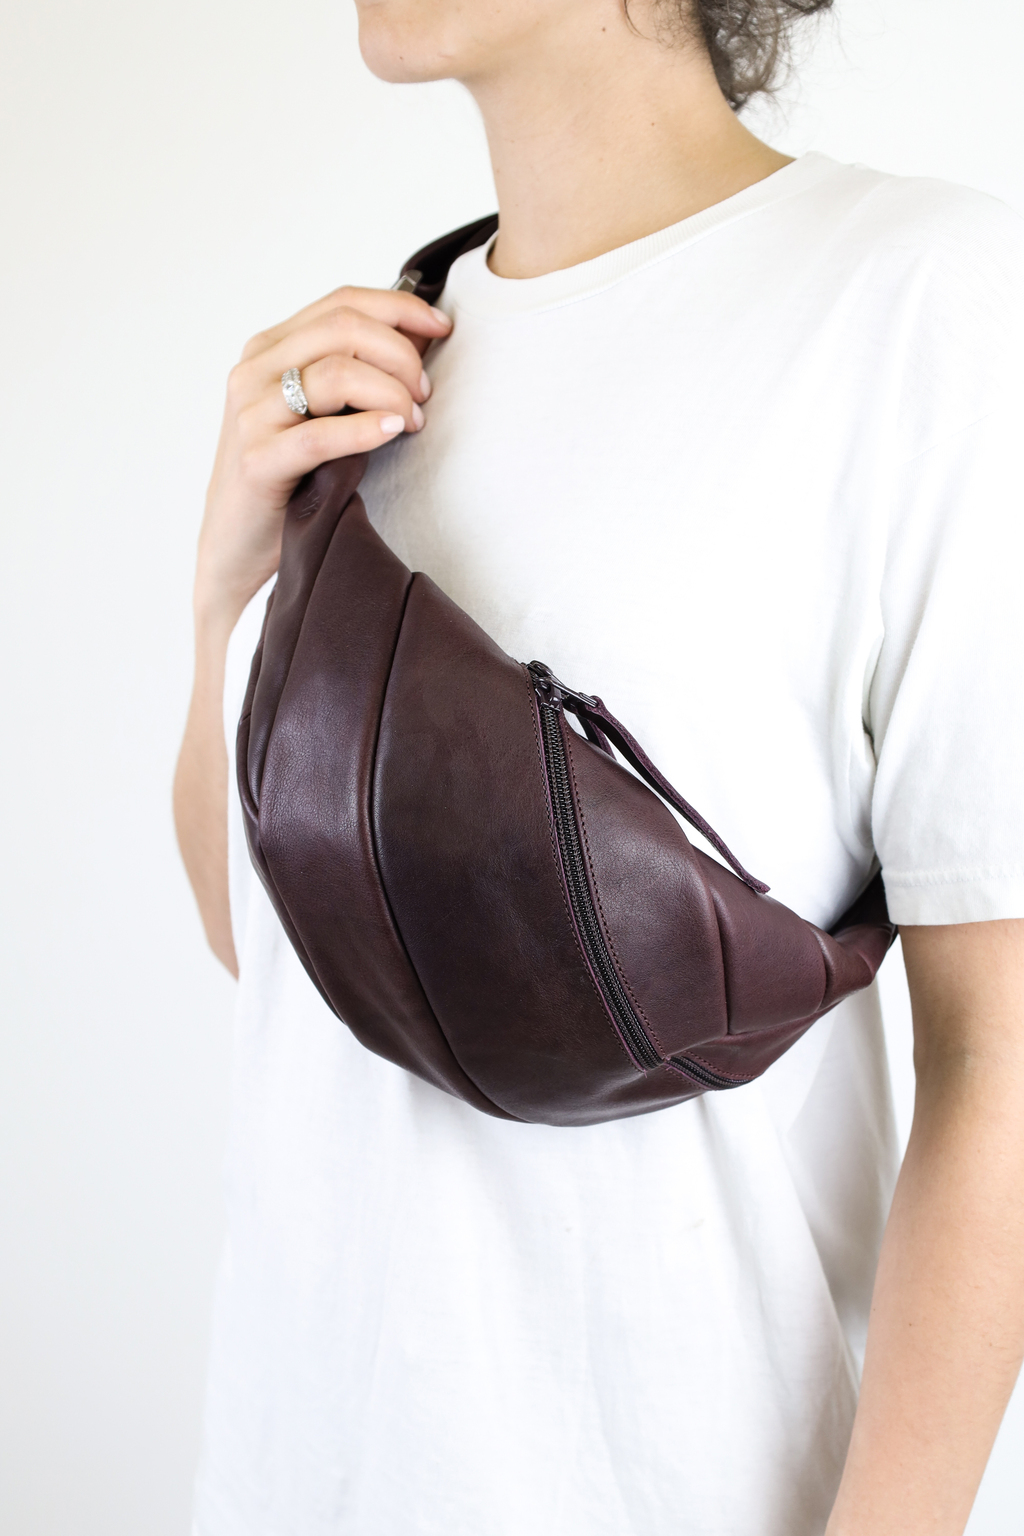 l'Opelle Italia Genuine Leather brown handbag purse Made in